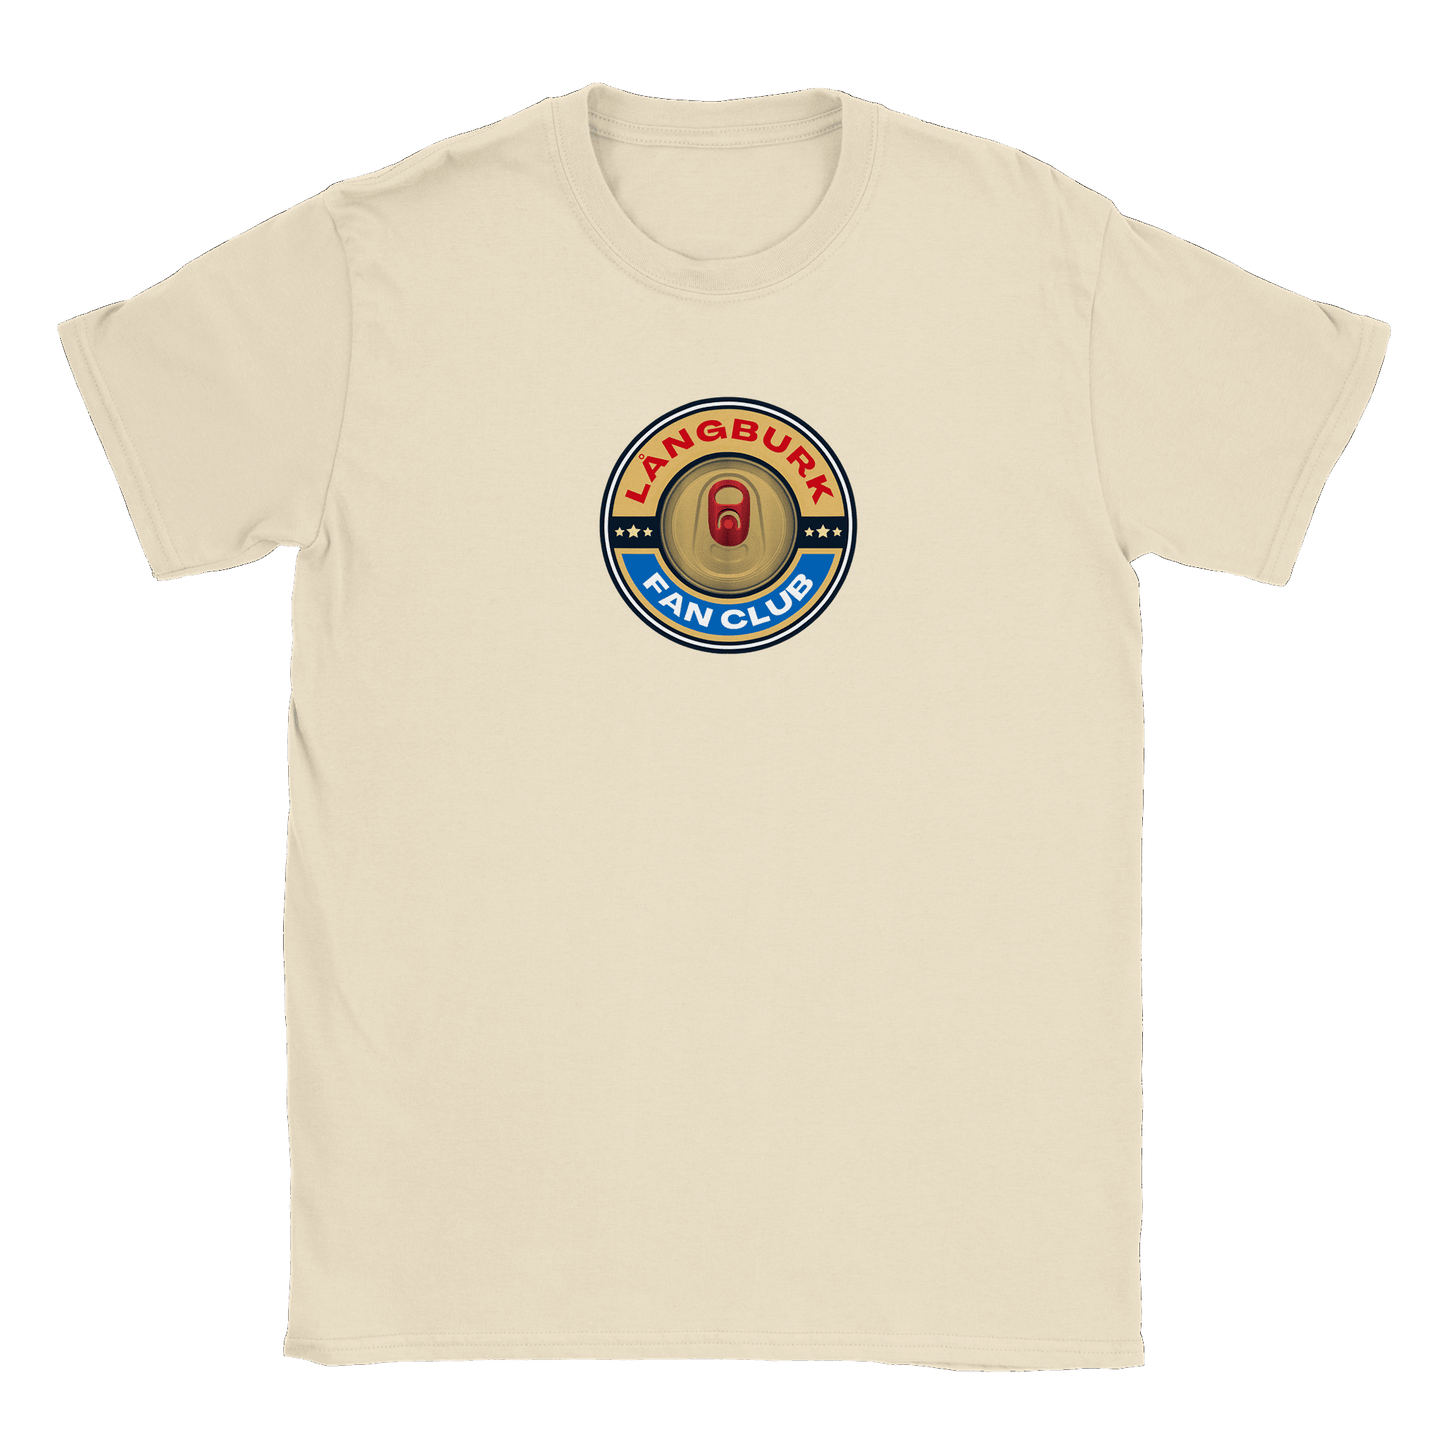 Långburk Fan Club Norrland Edition - T-shirt Natural